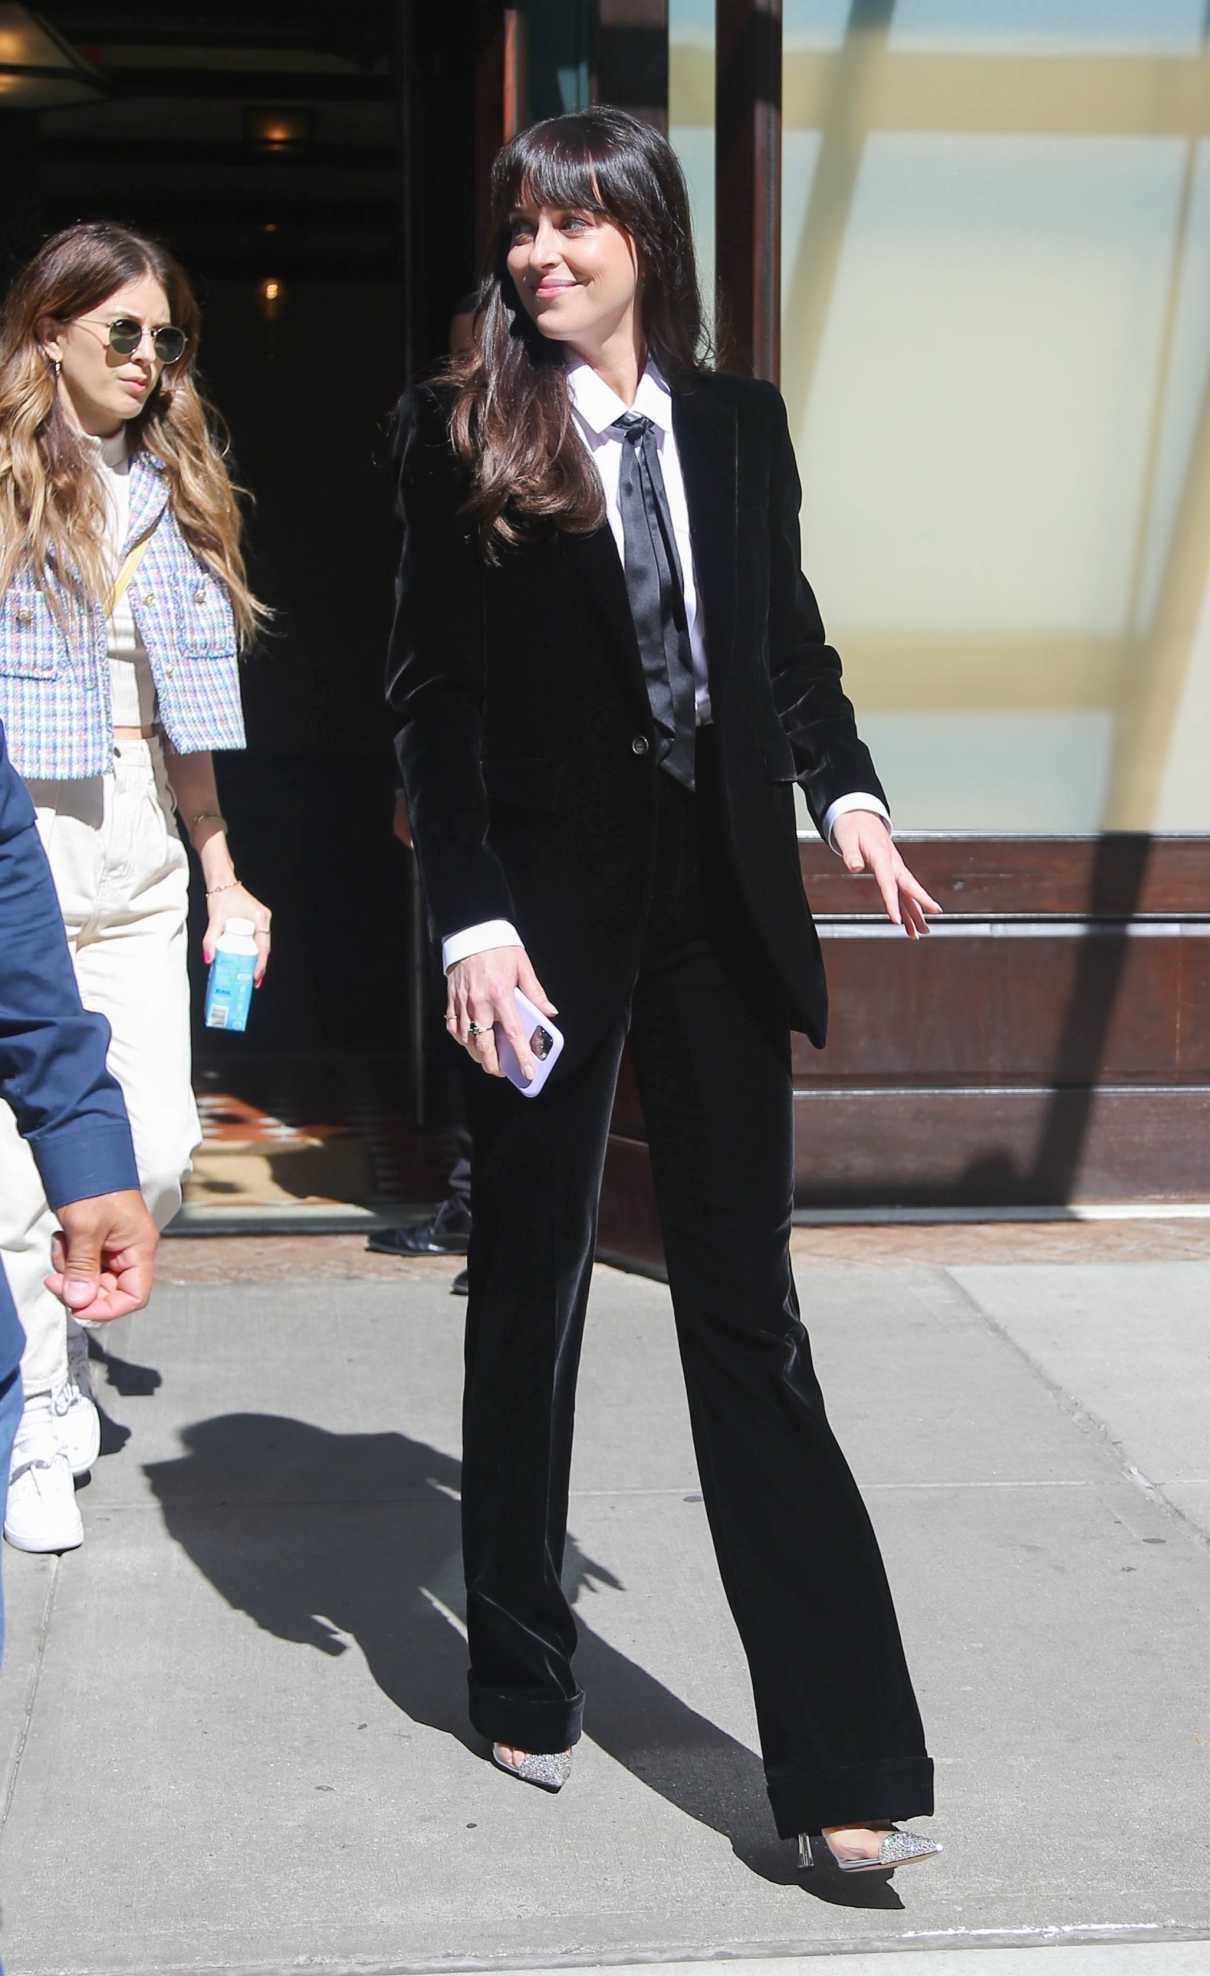 Dakota Johnson In A Black Pantsuit Leaves The Greenwich Hotel In New York City 06142022 3 